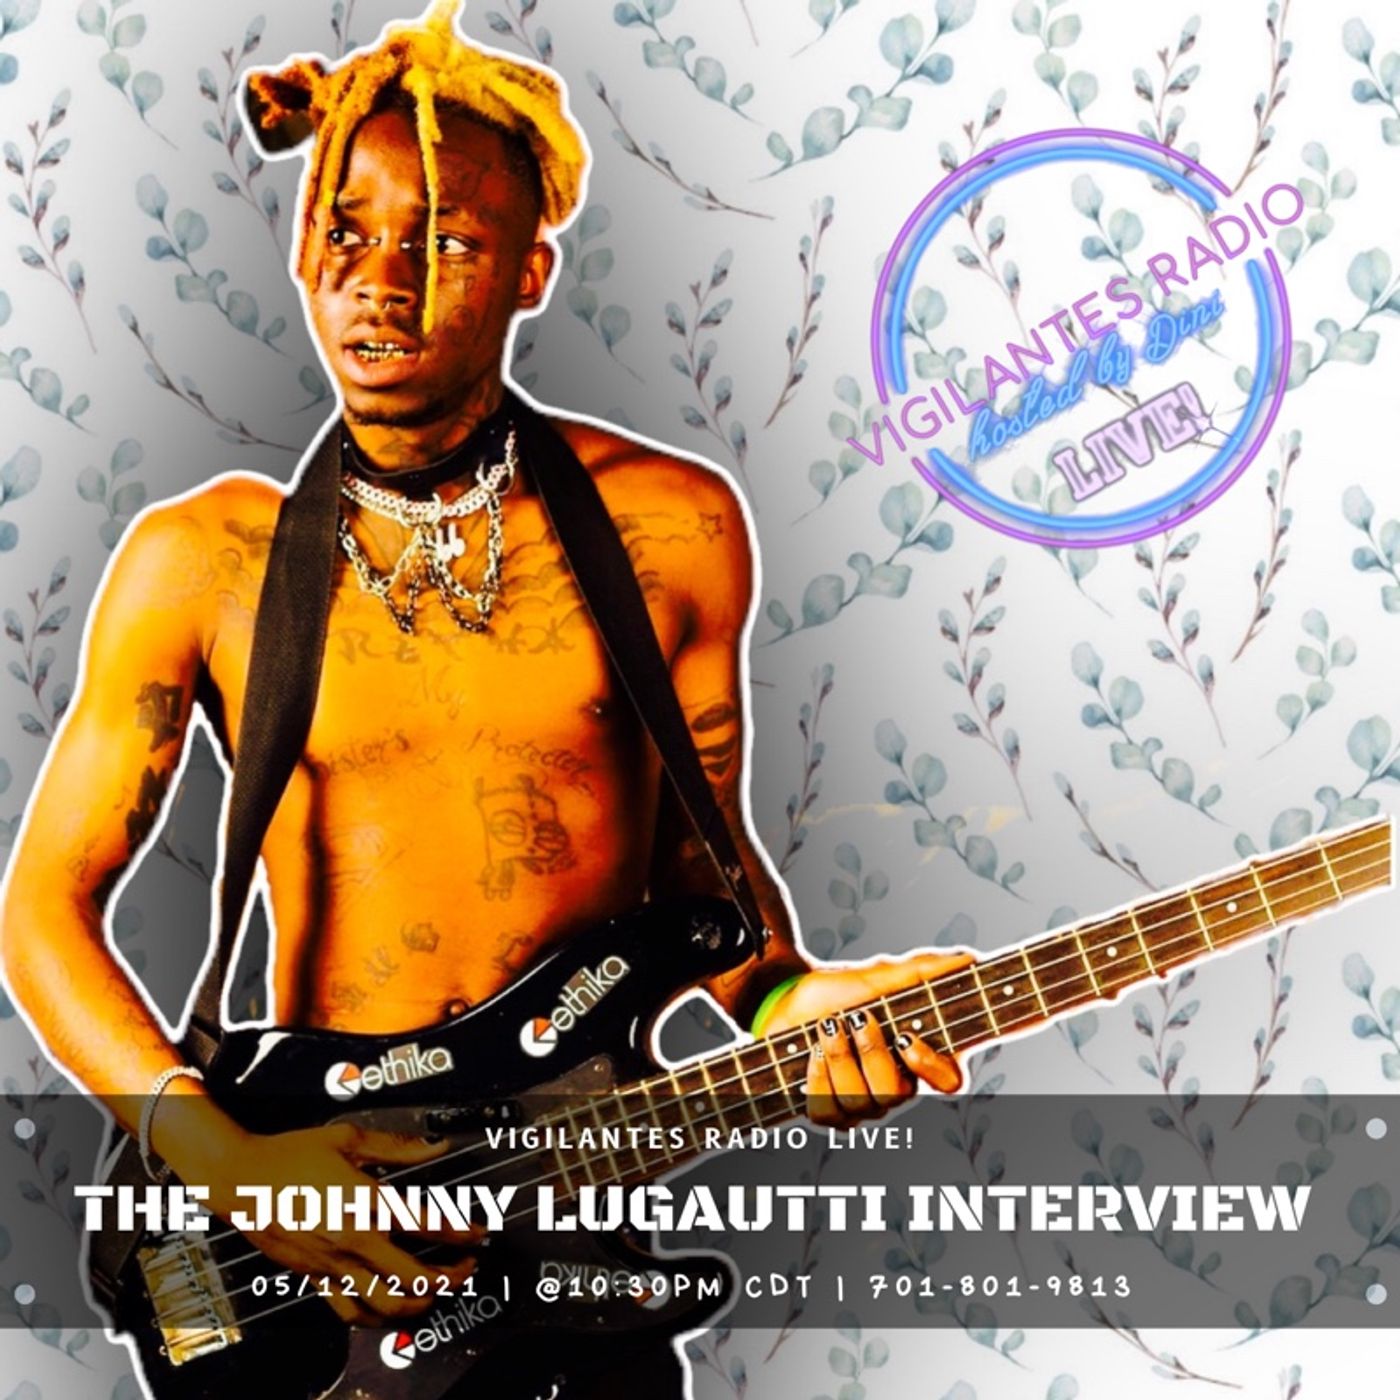 The Johnny Lugautti Interview. Image